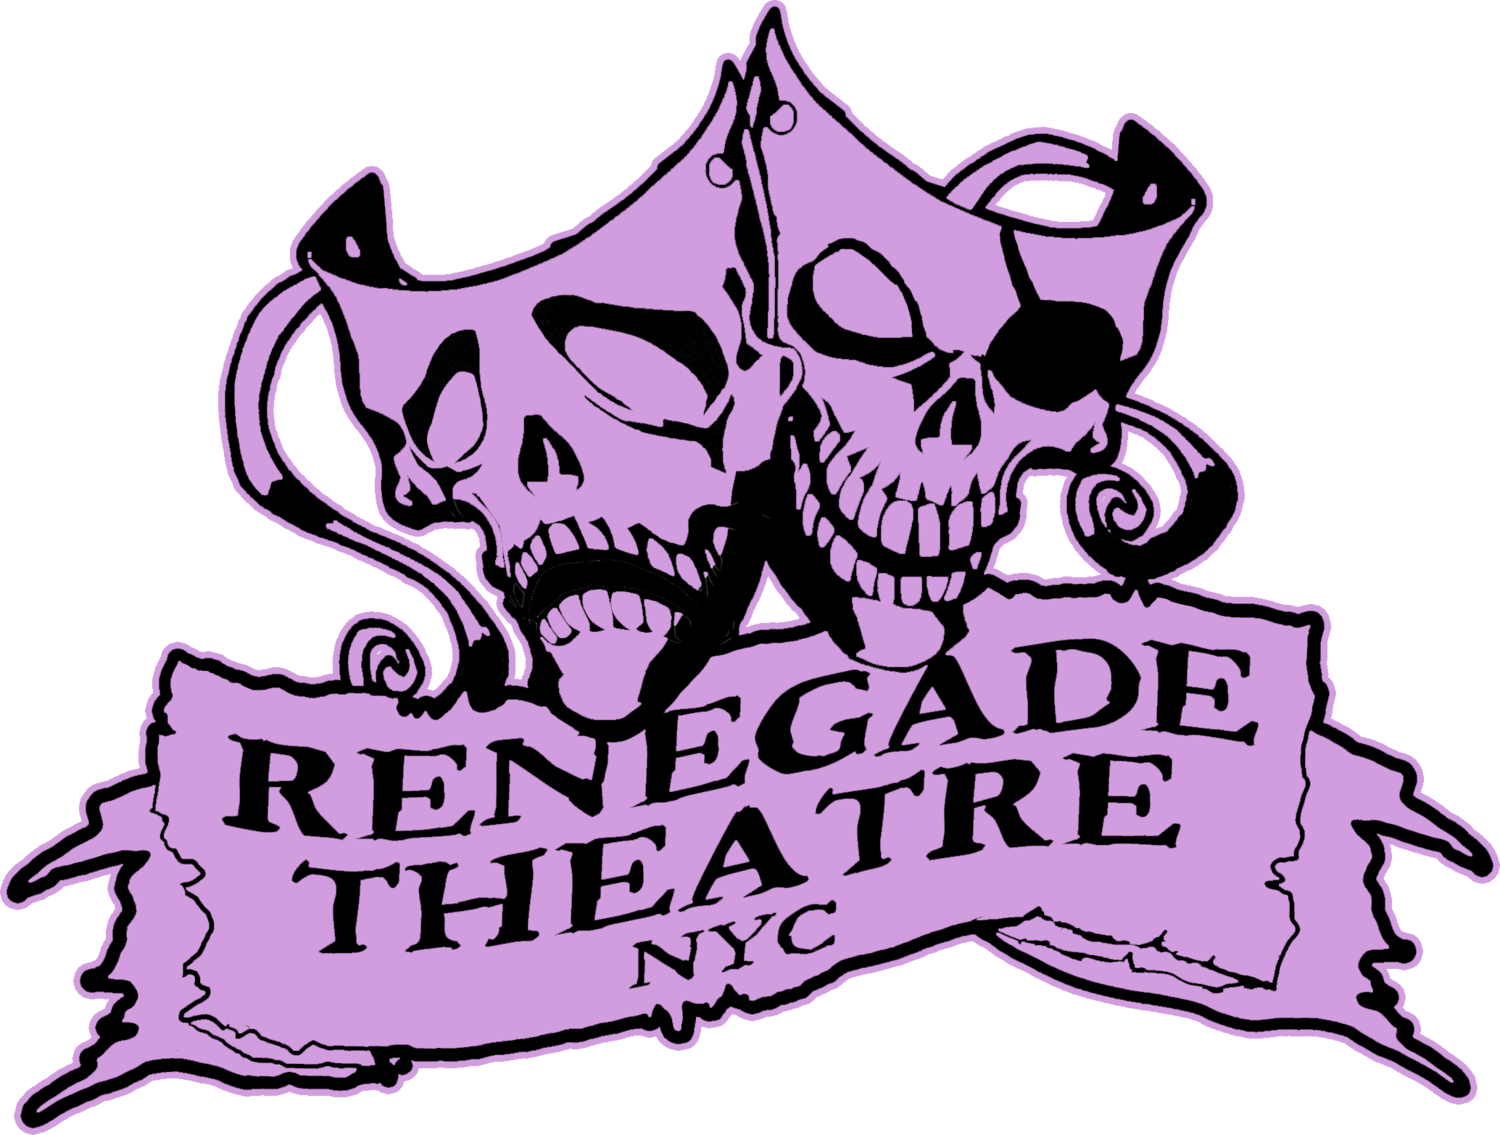 Renegade Theatre NYC